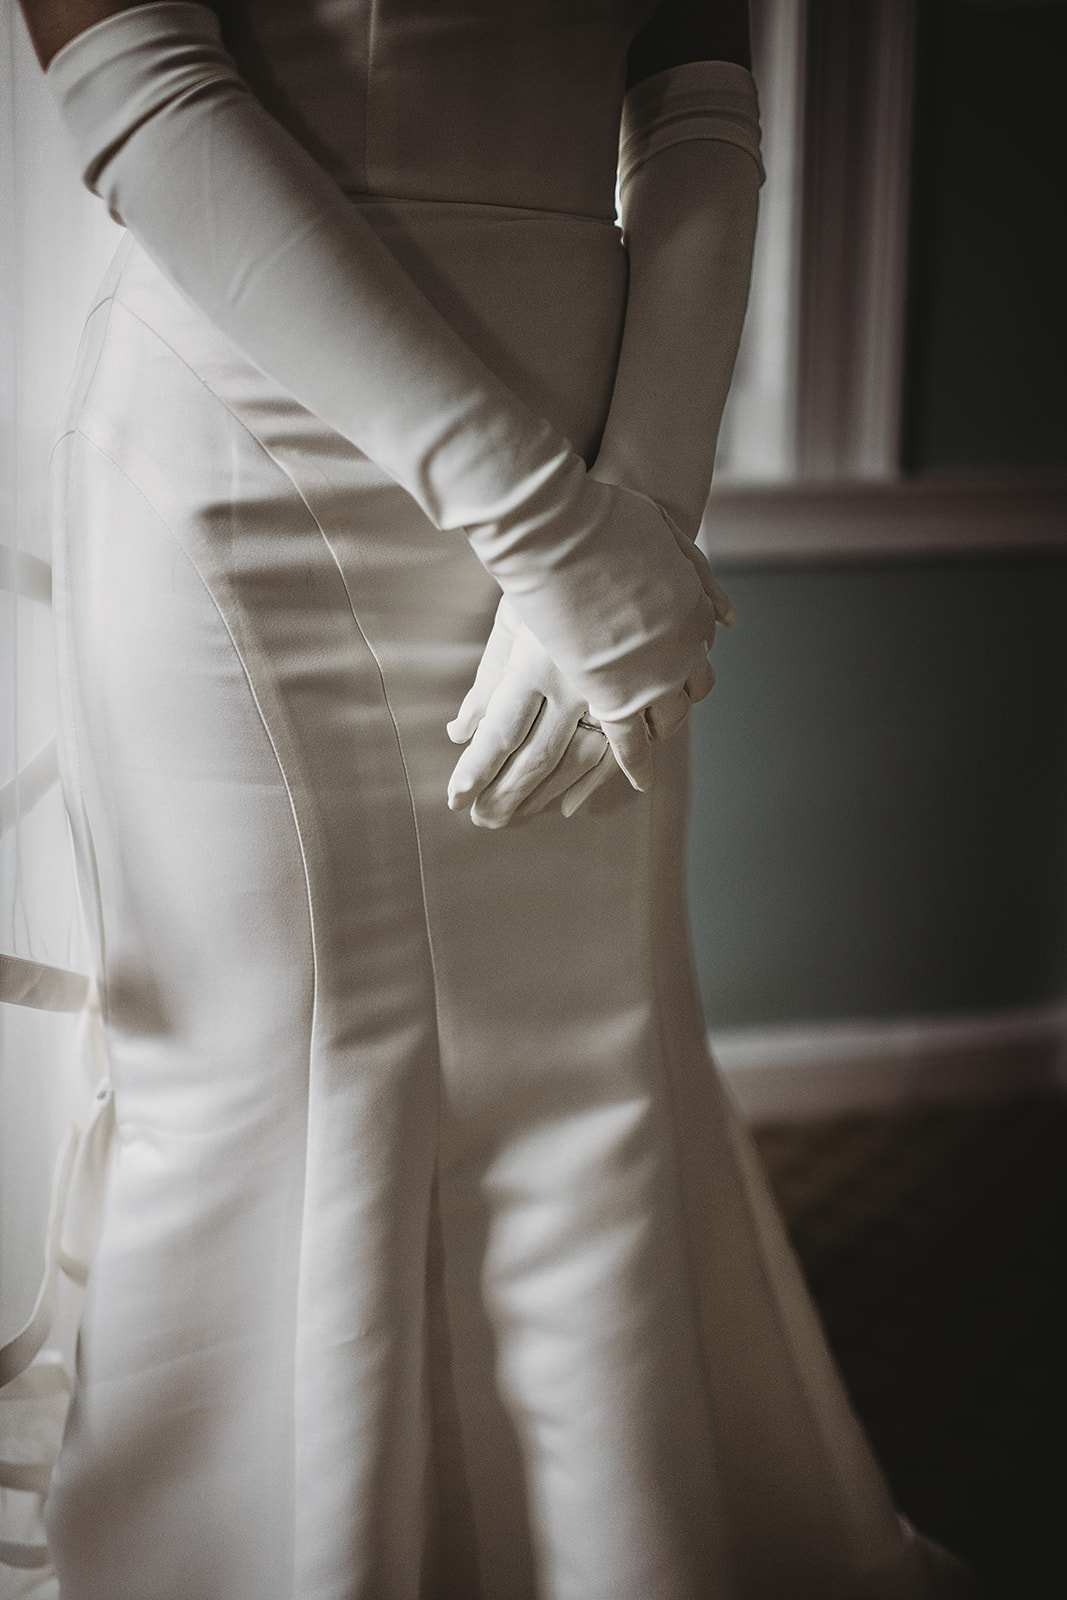 Baltimore wedding photographers capture bride wearing white gloves and wedding dress